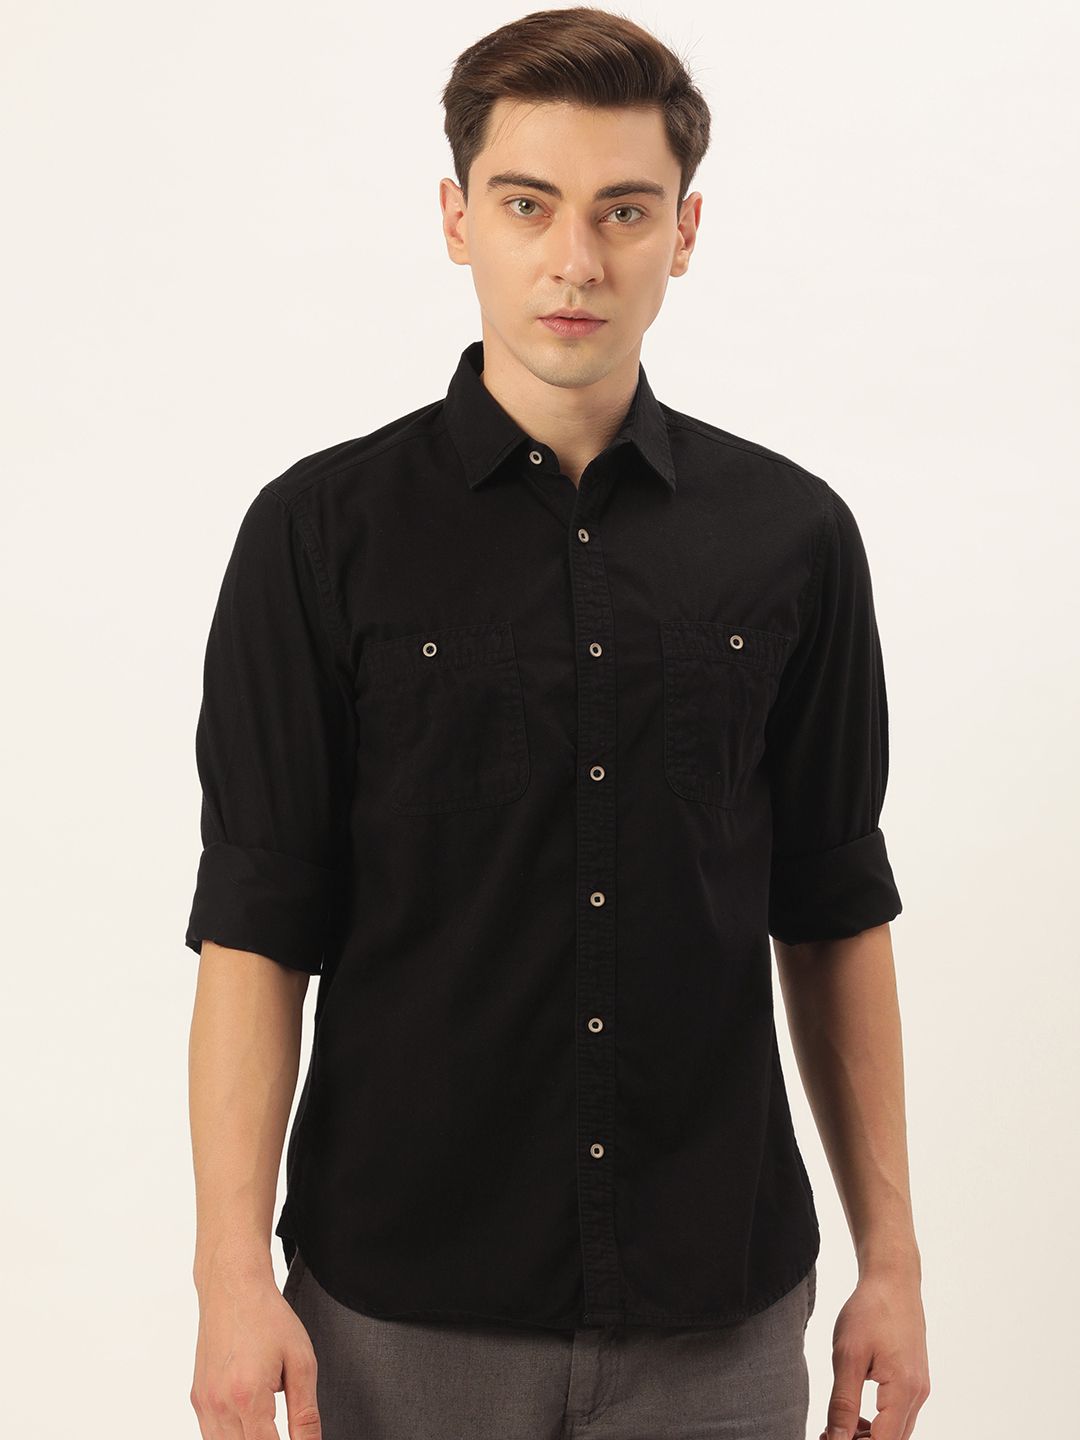 IVOC - Black 100% Cotton Regular Fit Men's Casual Shirt ( Pack of 1 )